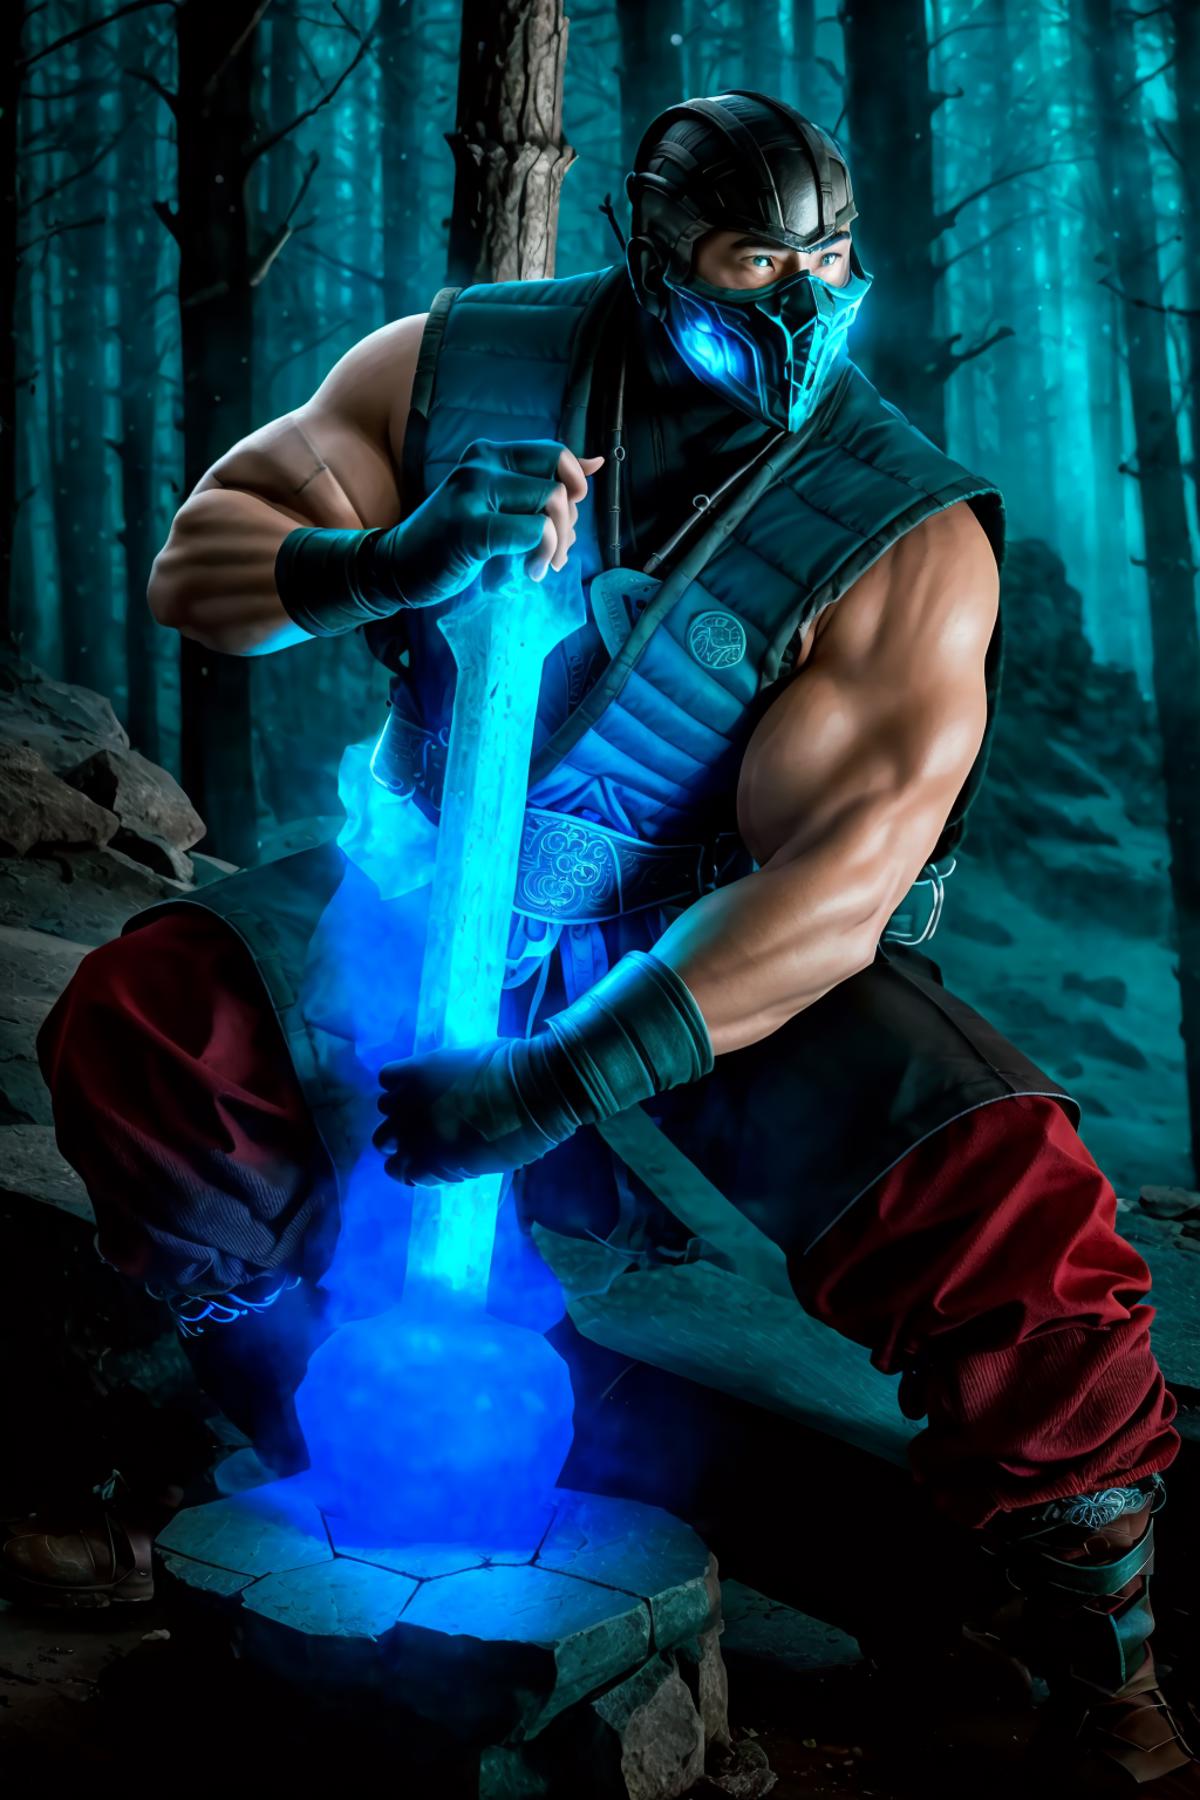 Sub-Zero (Mortal Kombat) image by DeViLDoNia